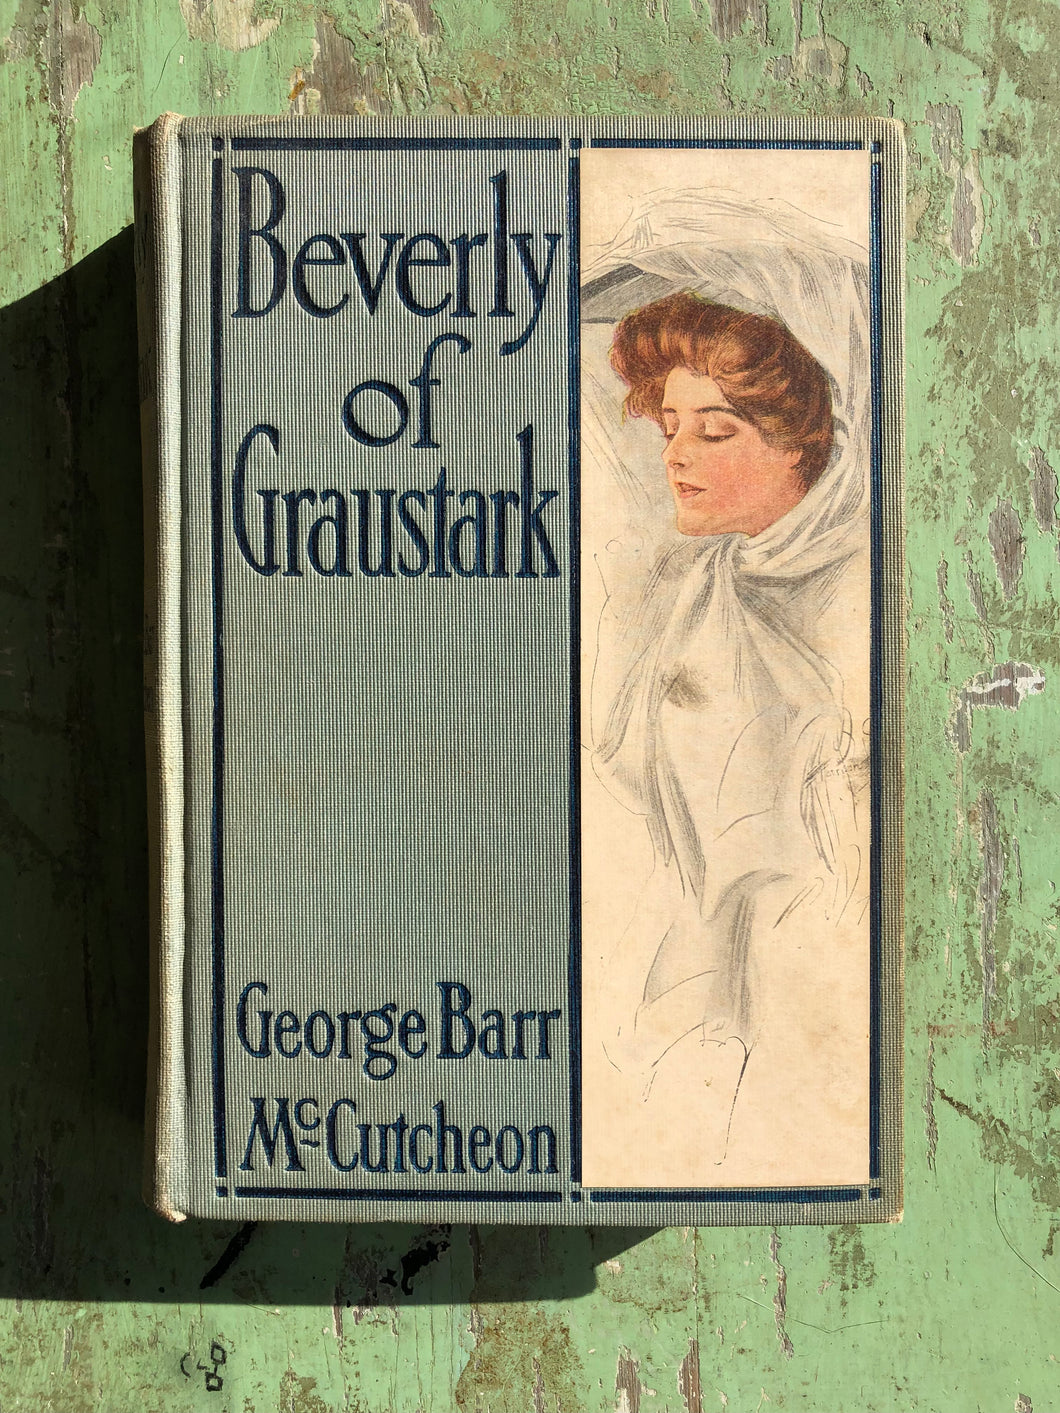 Beverly of Graustark by George Barr McCutcheon